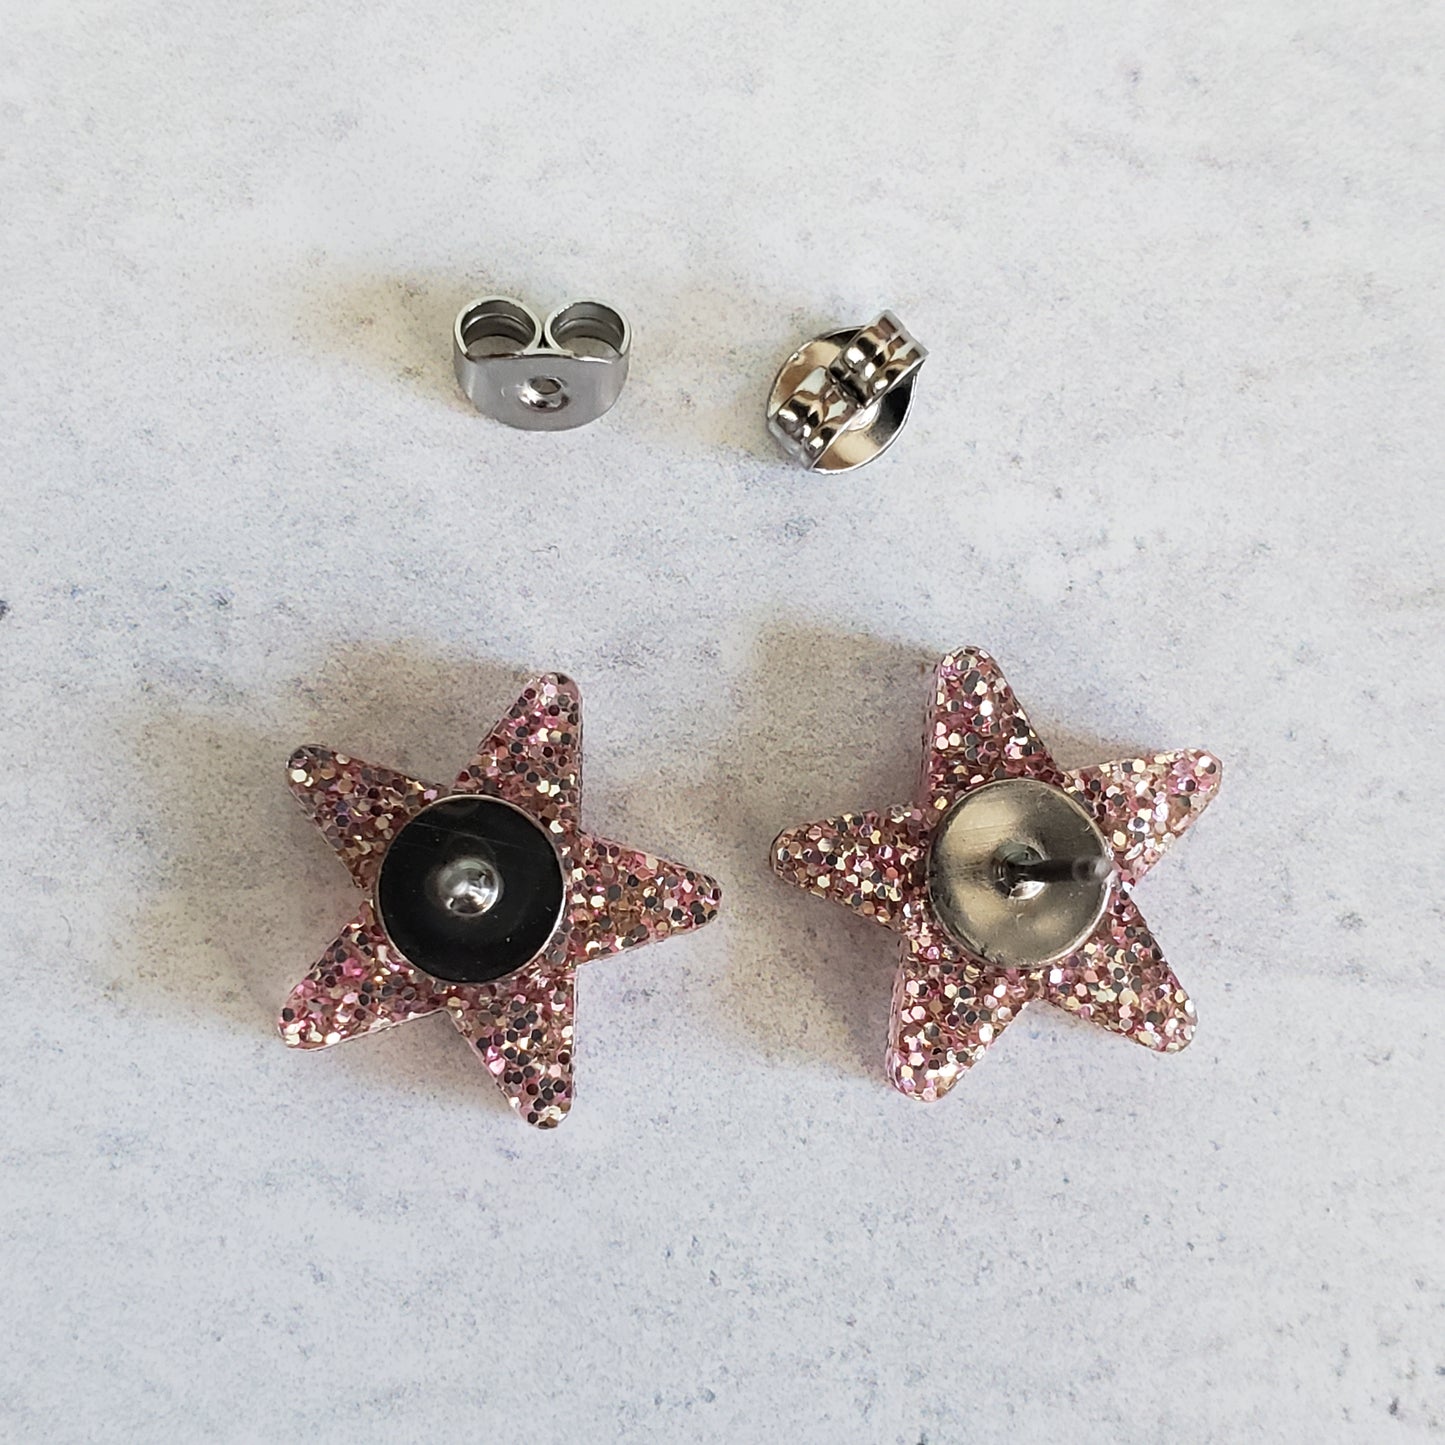 Backside of rose gold tone glitter star stud earrings showing posts